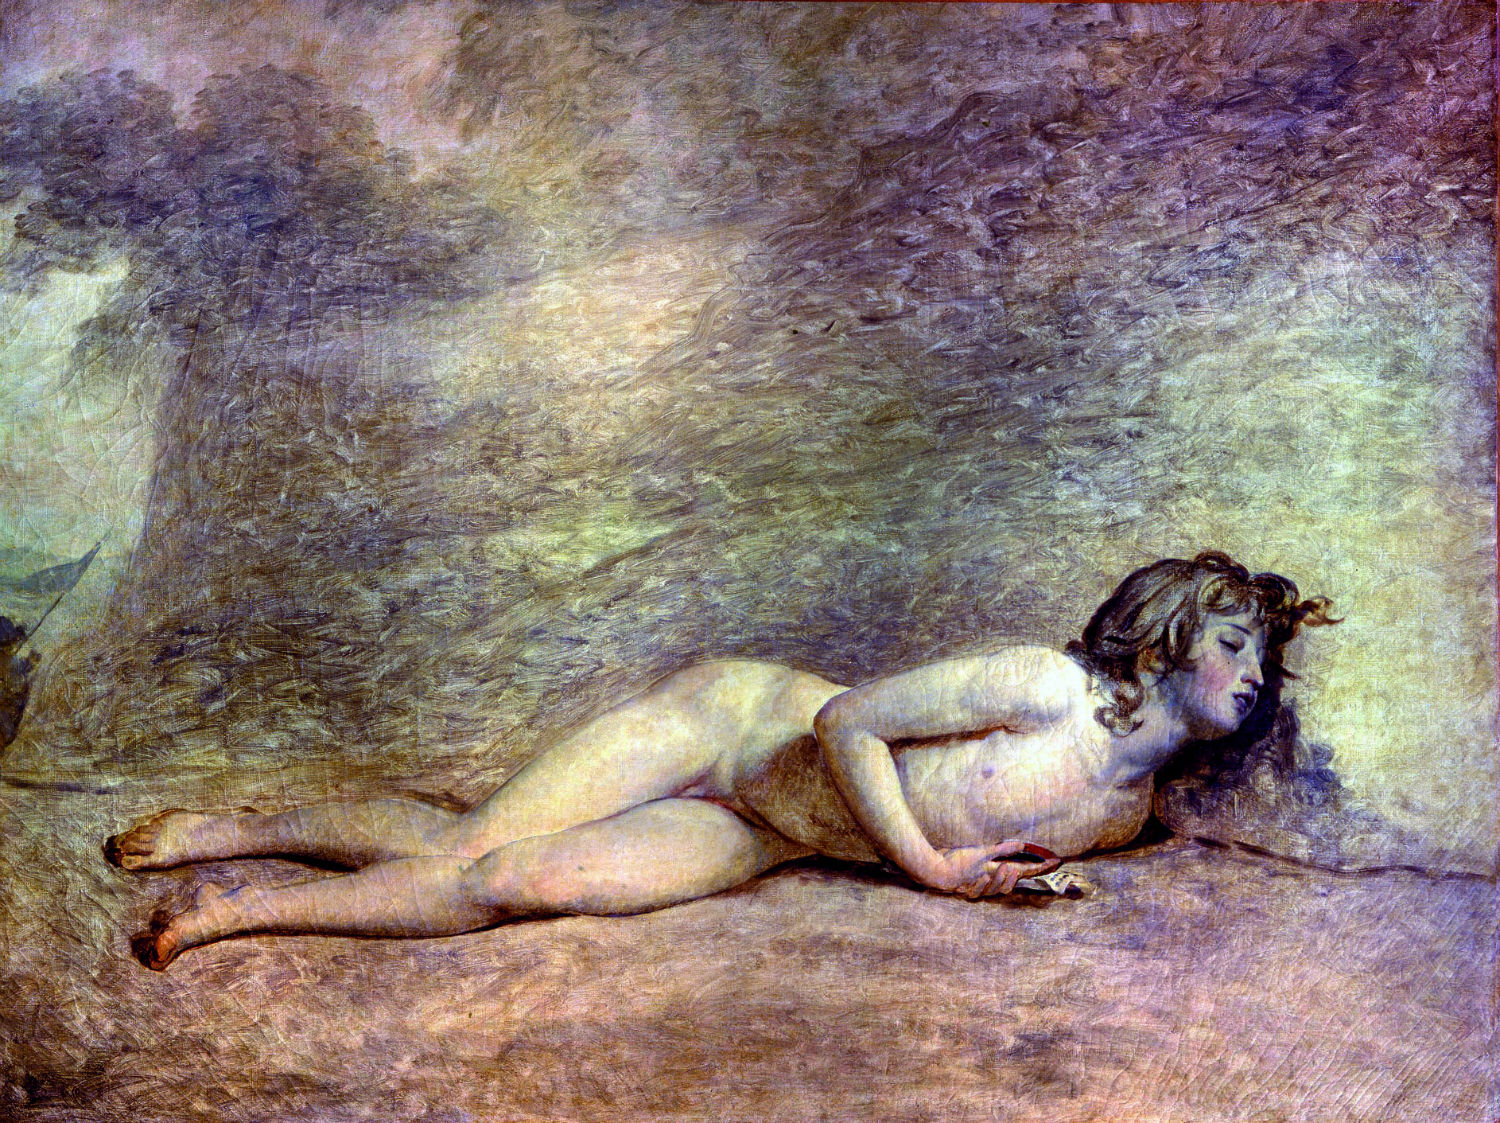 Jacques-Louis David "The Death of Bara"